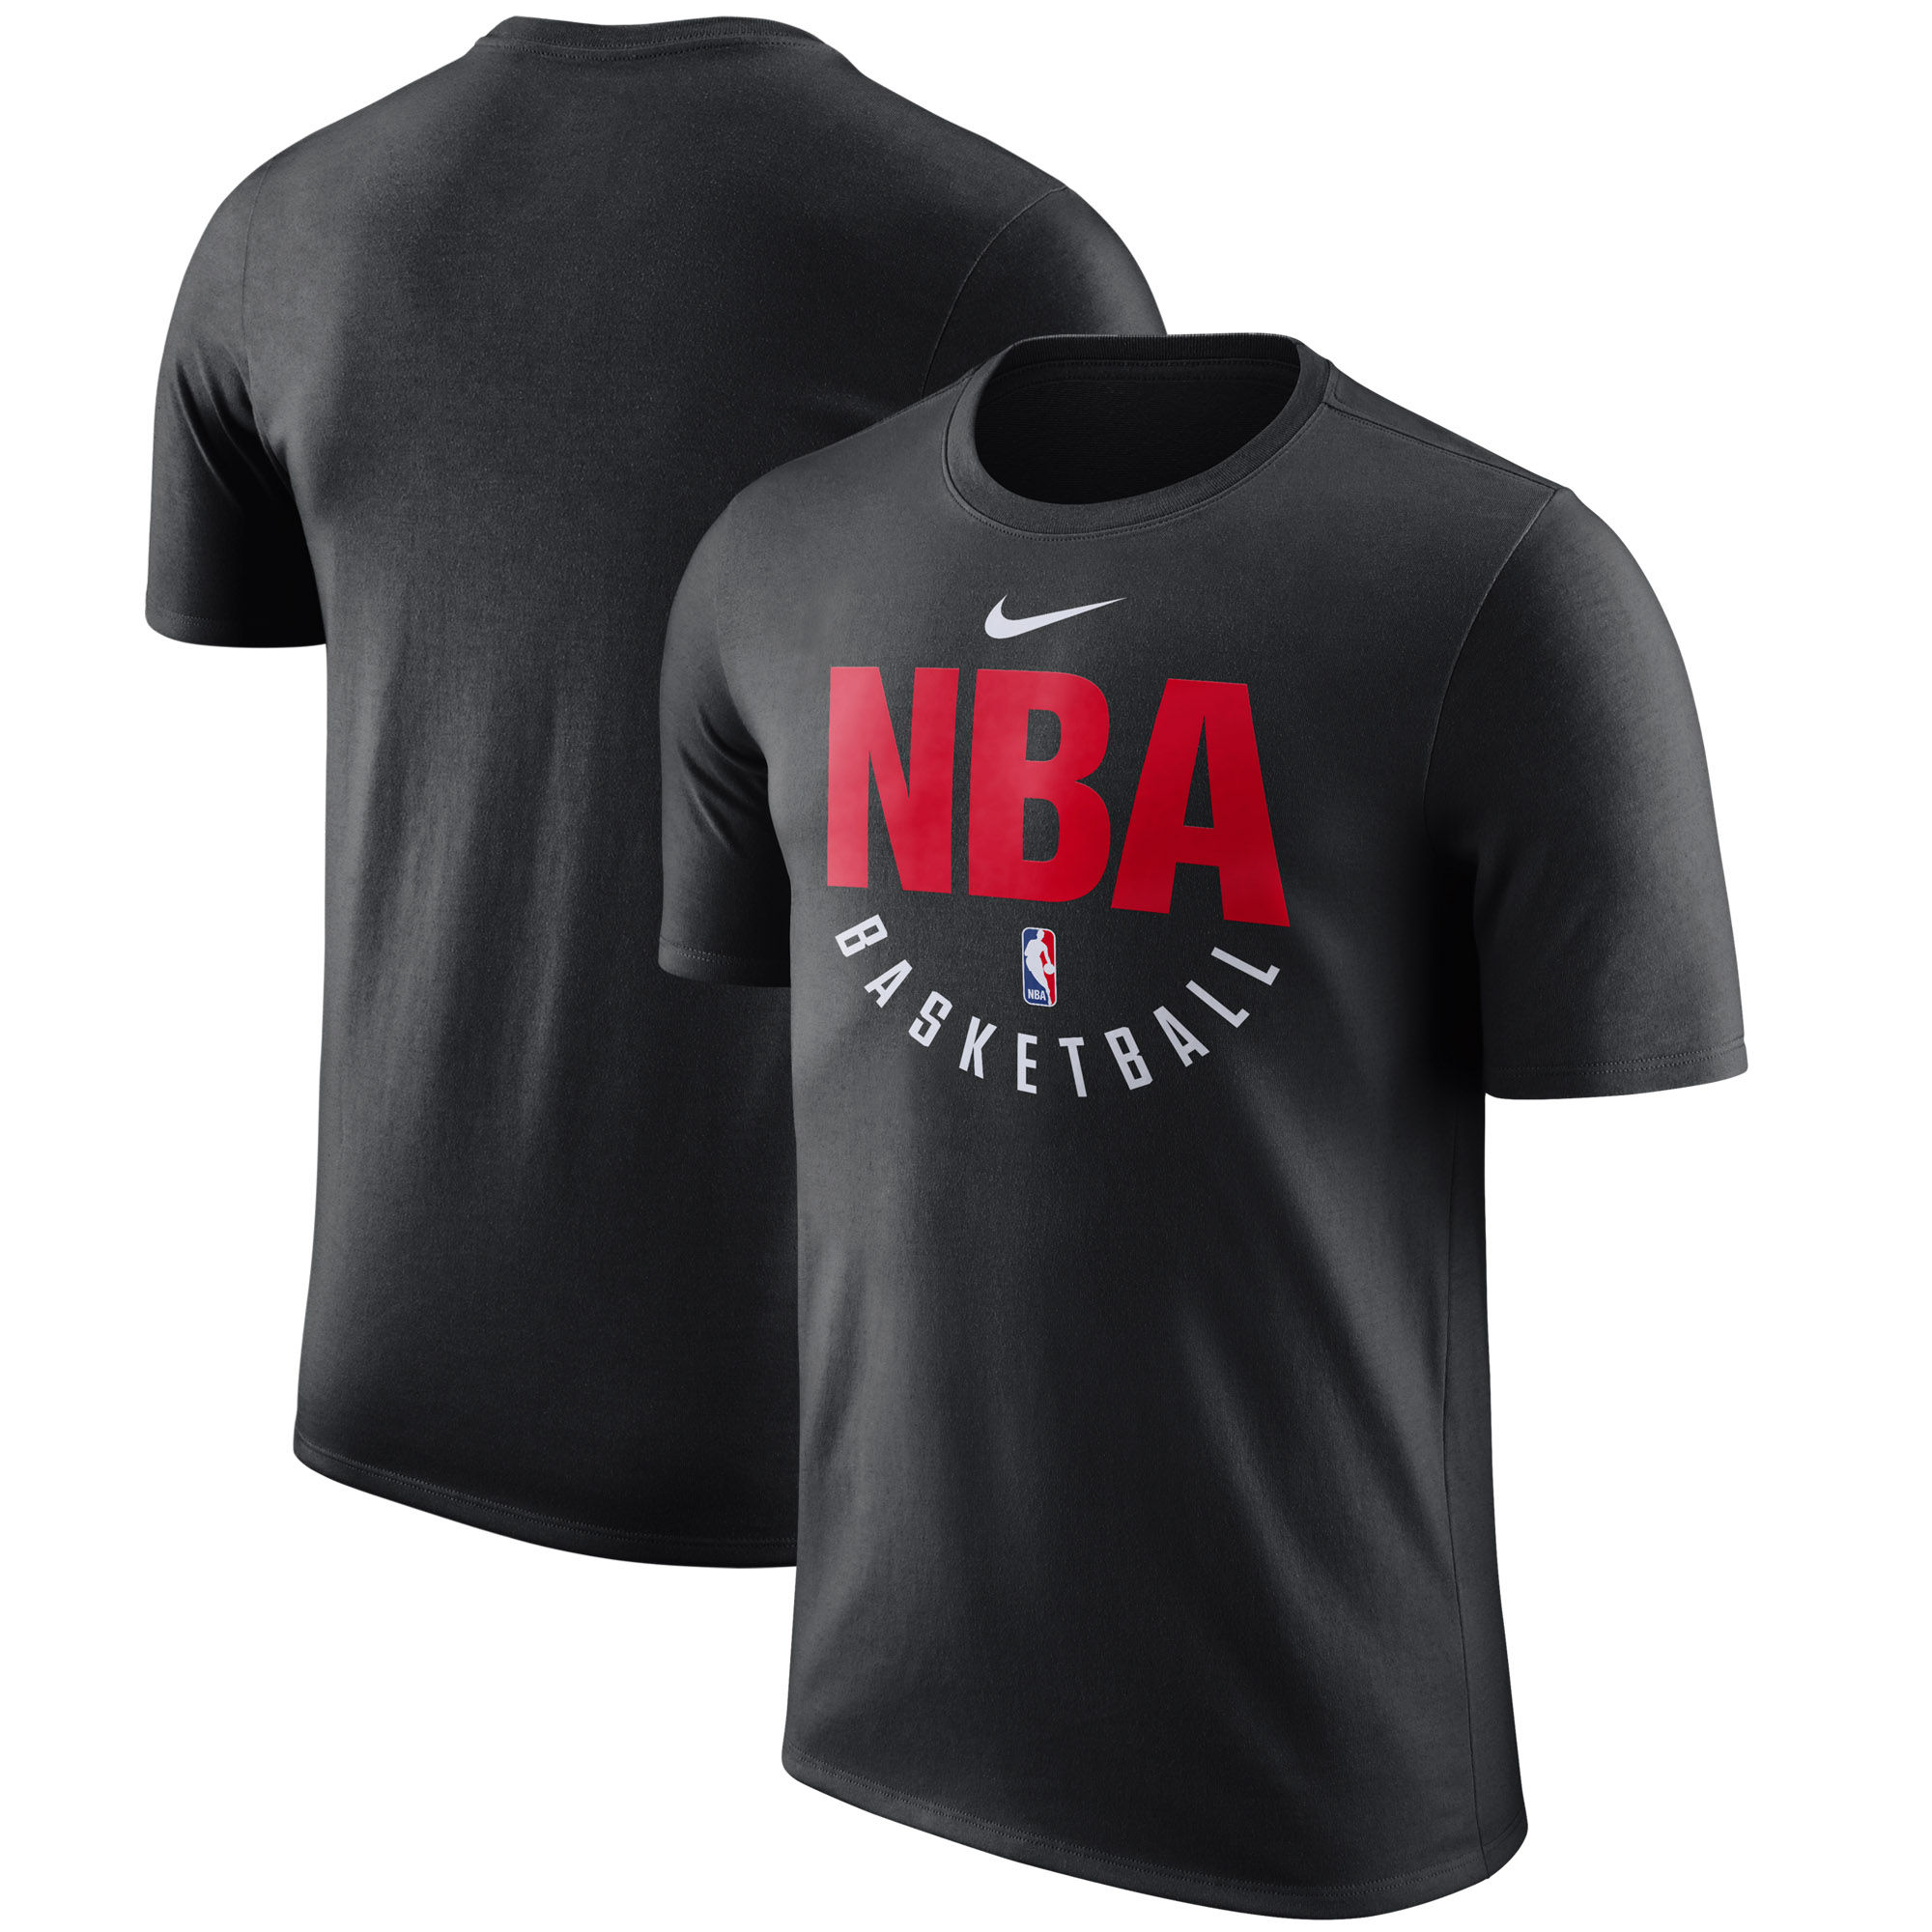 Nike NBA Logo Gear Black Essential Performance Practice T-Shirt